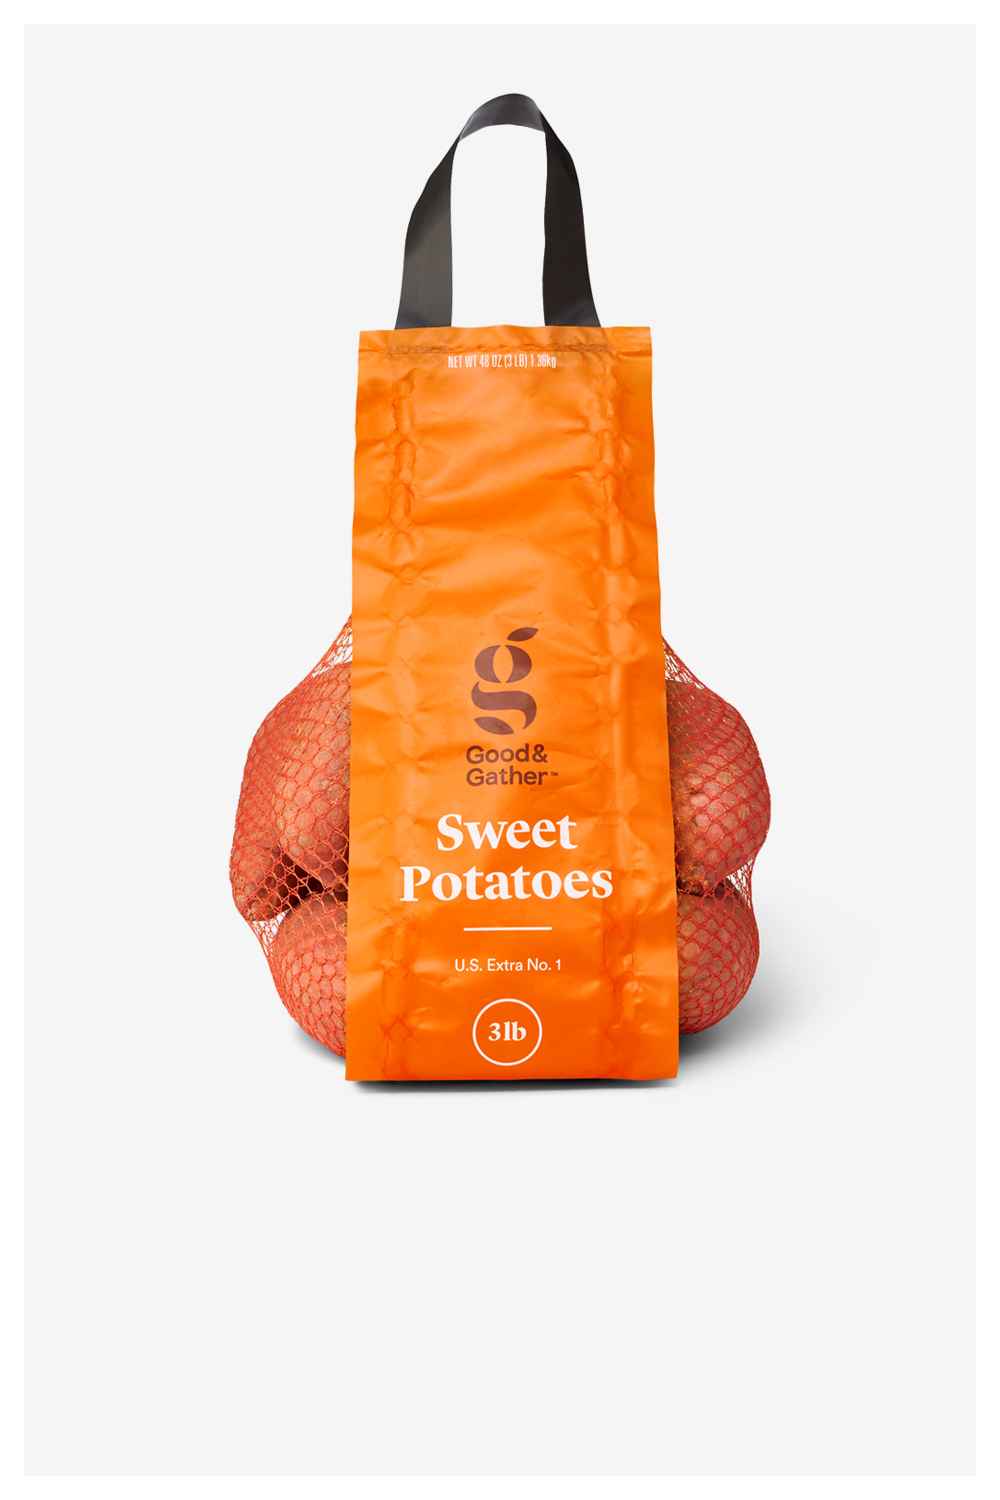 Sweet Potatoes - 3lb Bag - Good & Gather™, Baking Sweet Potato - each